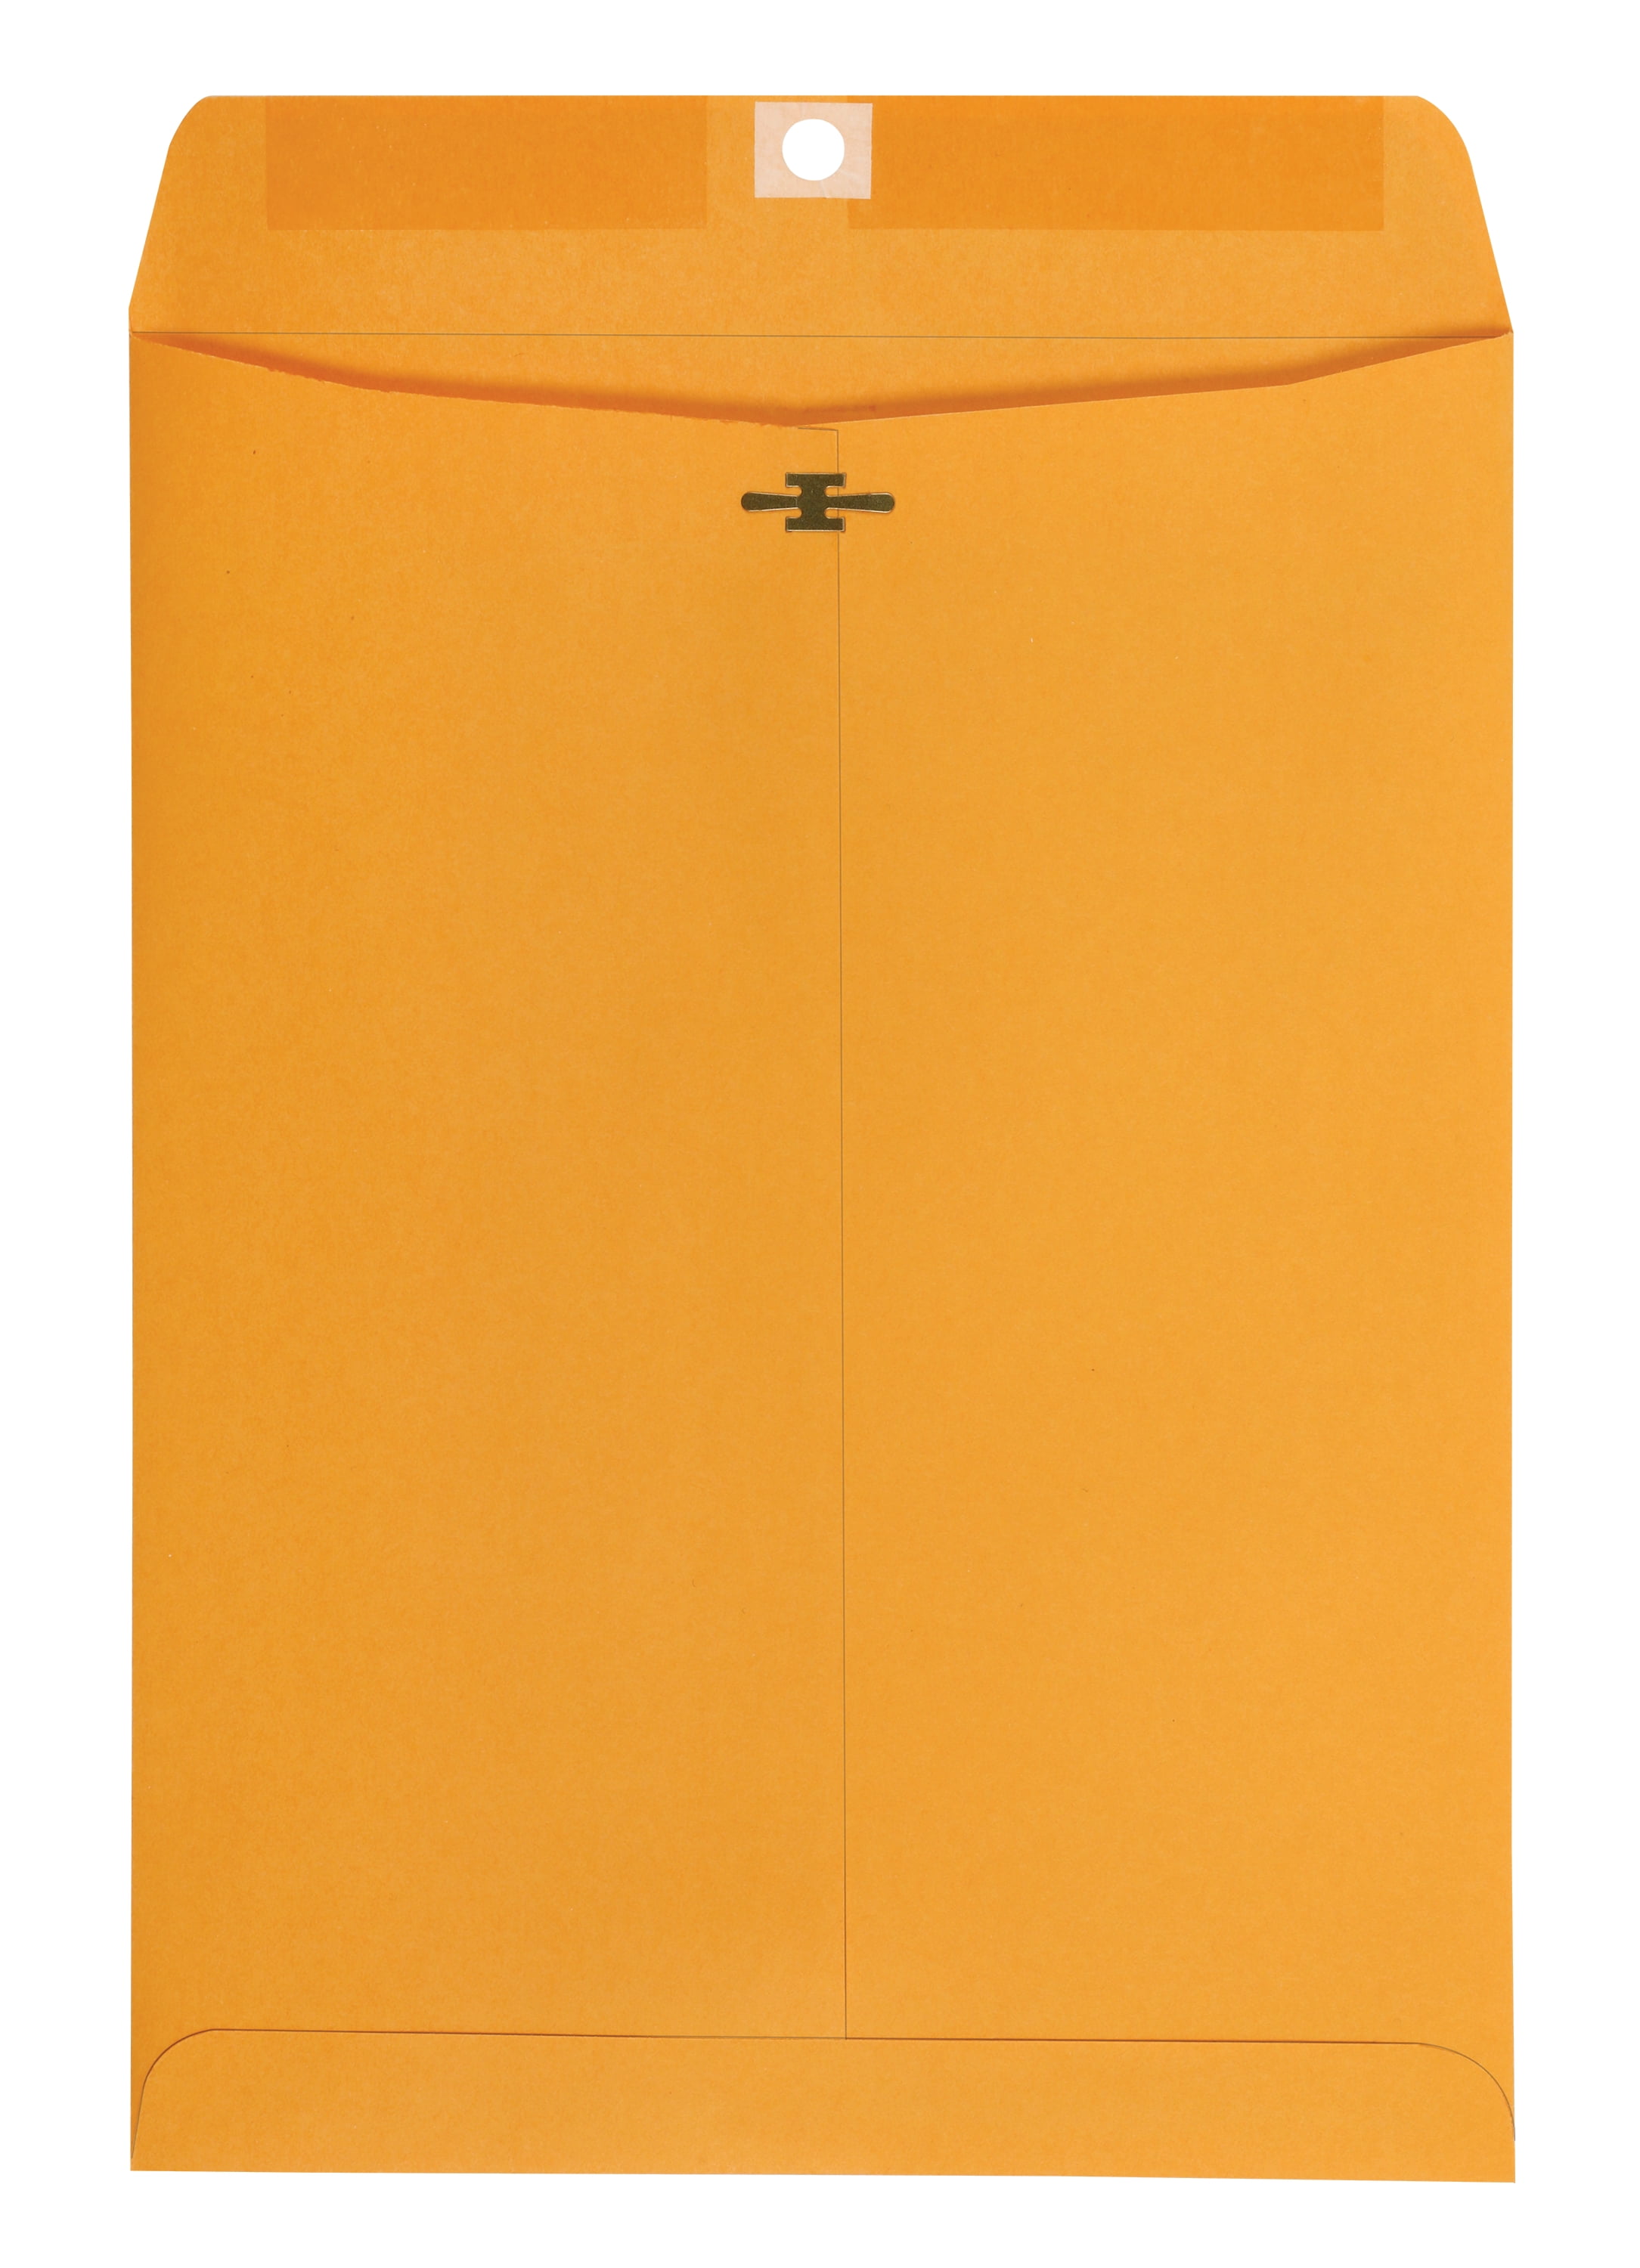 QUA43568 28 lb Kraft Paper 9 x 12 Postage Saving ClearClasp Envelopes New Version 100 per Box with Reusable Redi-Tac Closure & Gummed Flap